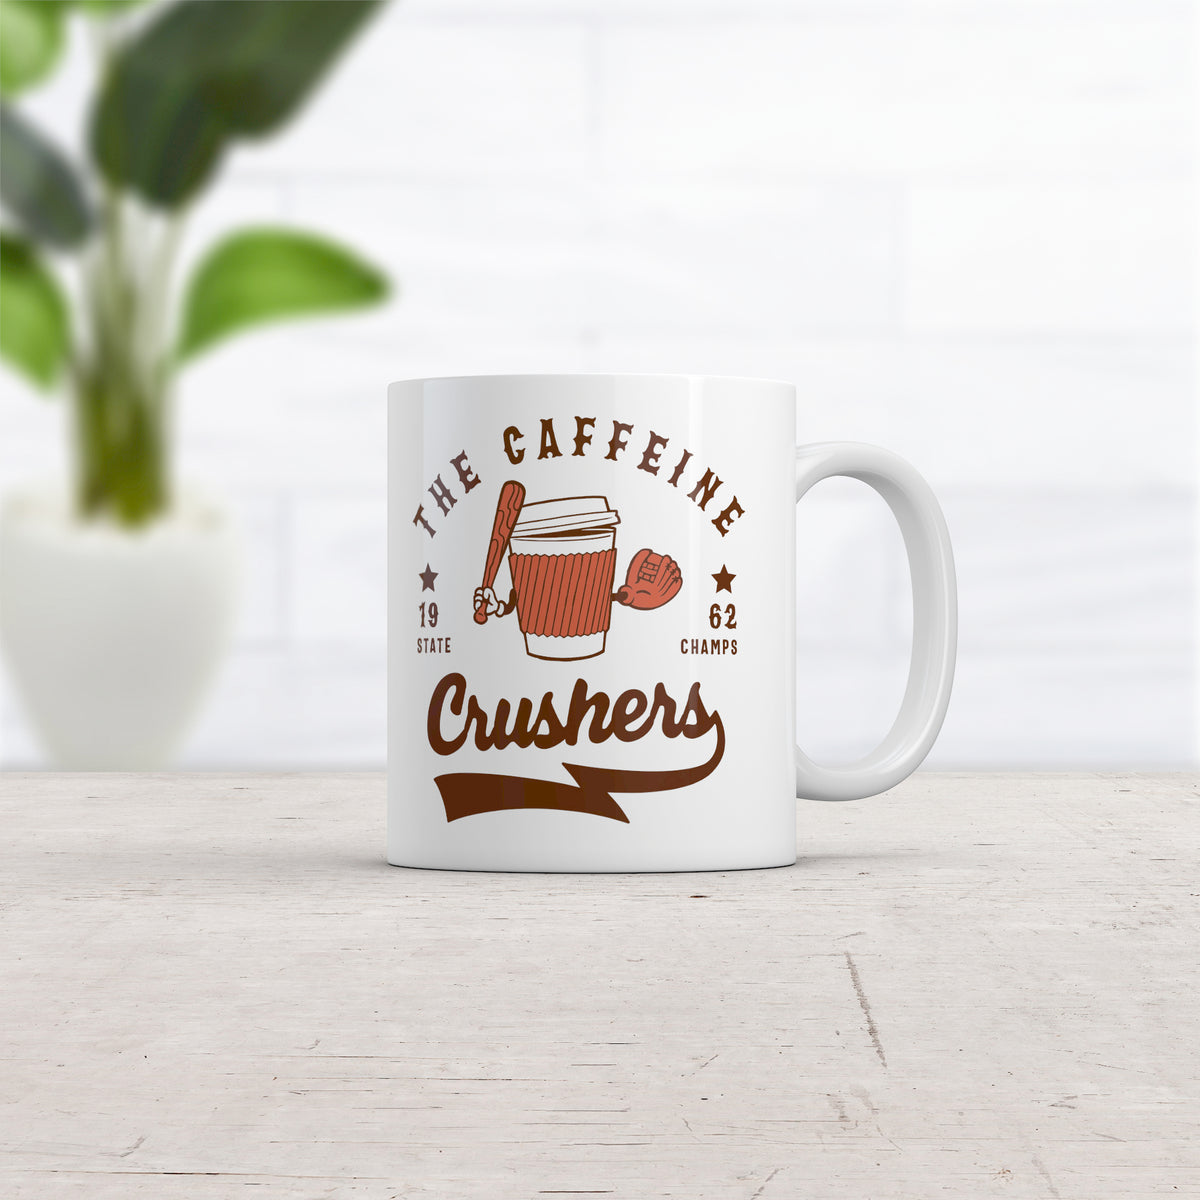 The Caffeine Crushers Mug